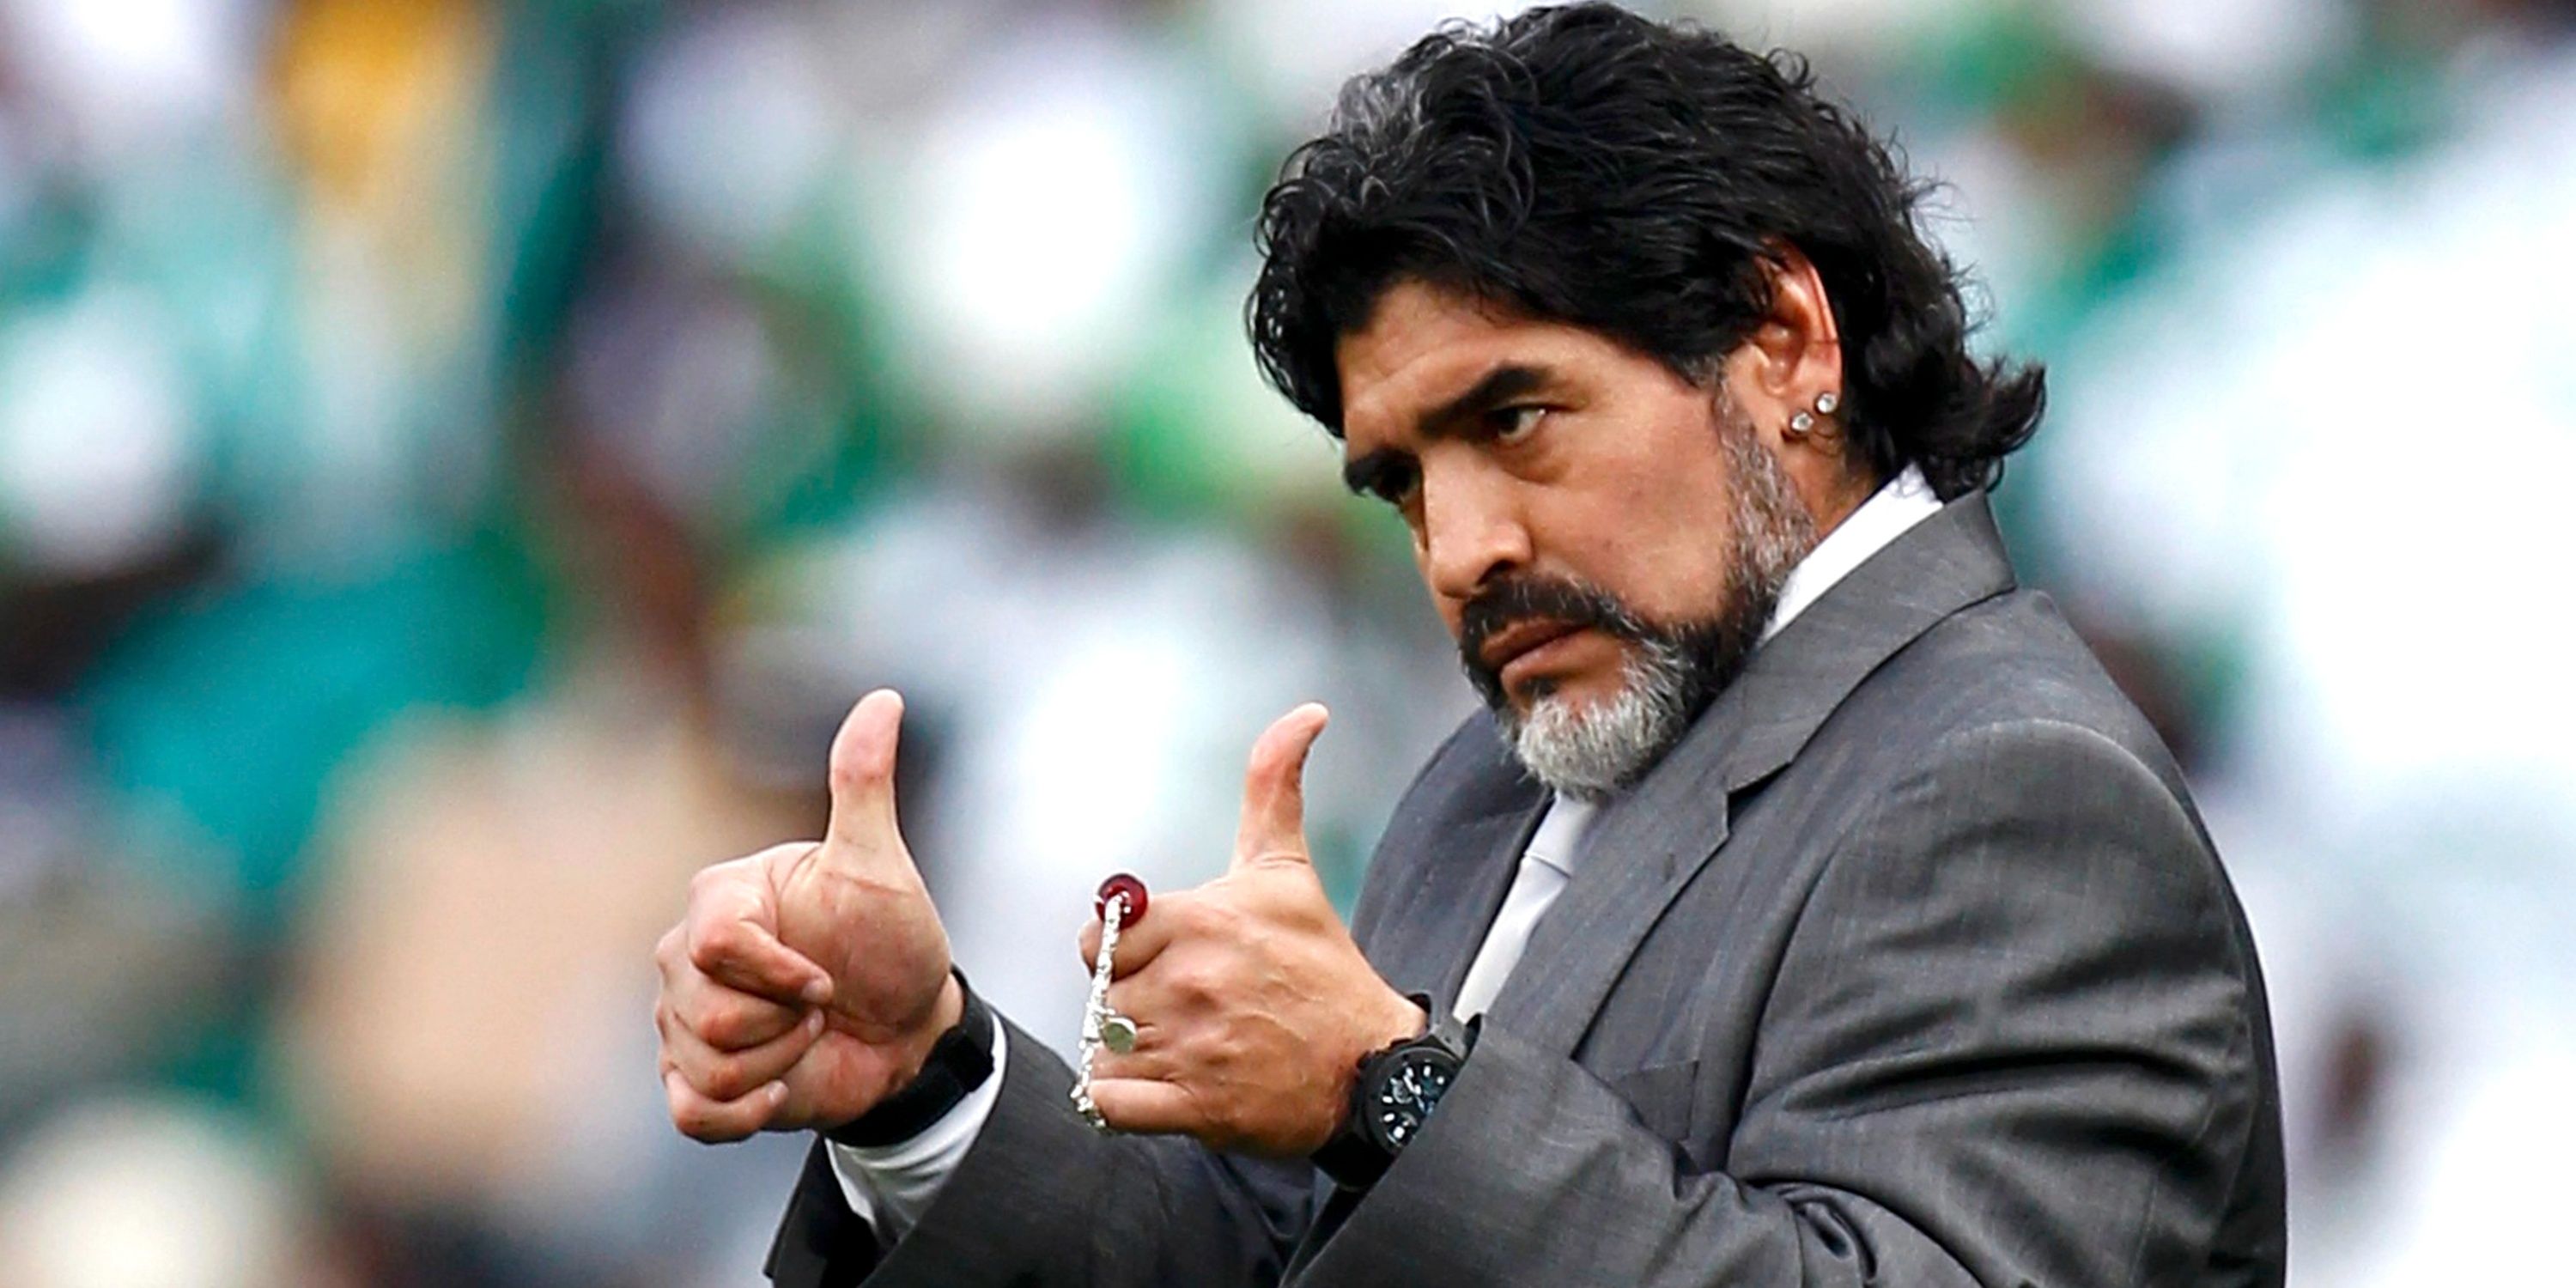 Diego Maradona wearing two watches